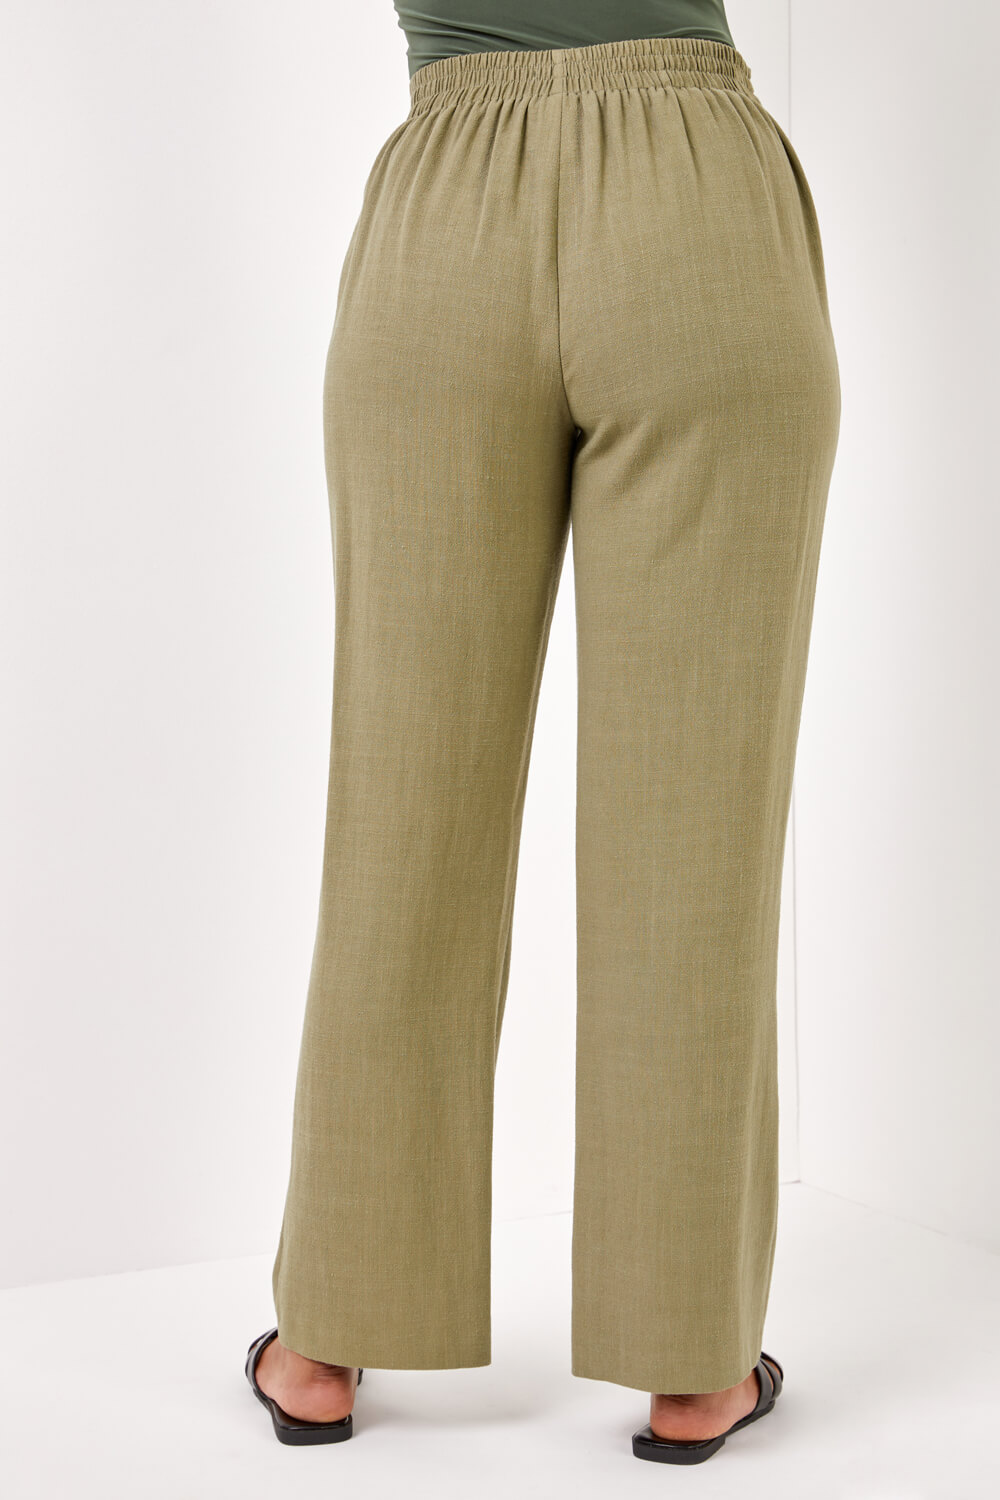 Petite Linen Tie Front Trousers in Khaki - Roman Originals UK